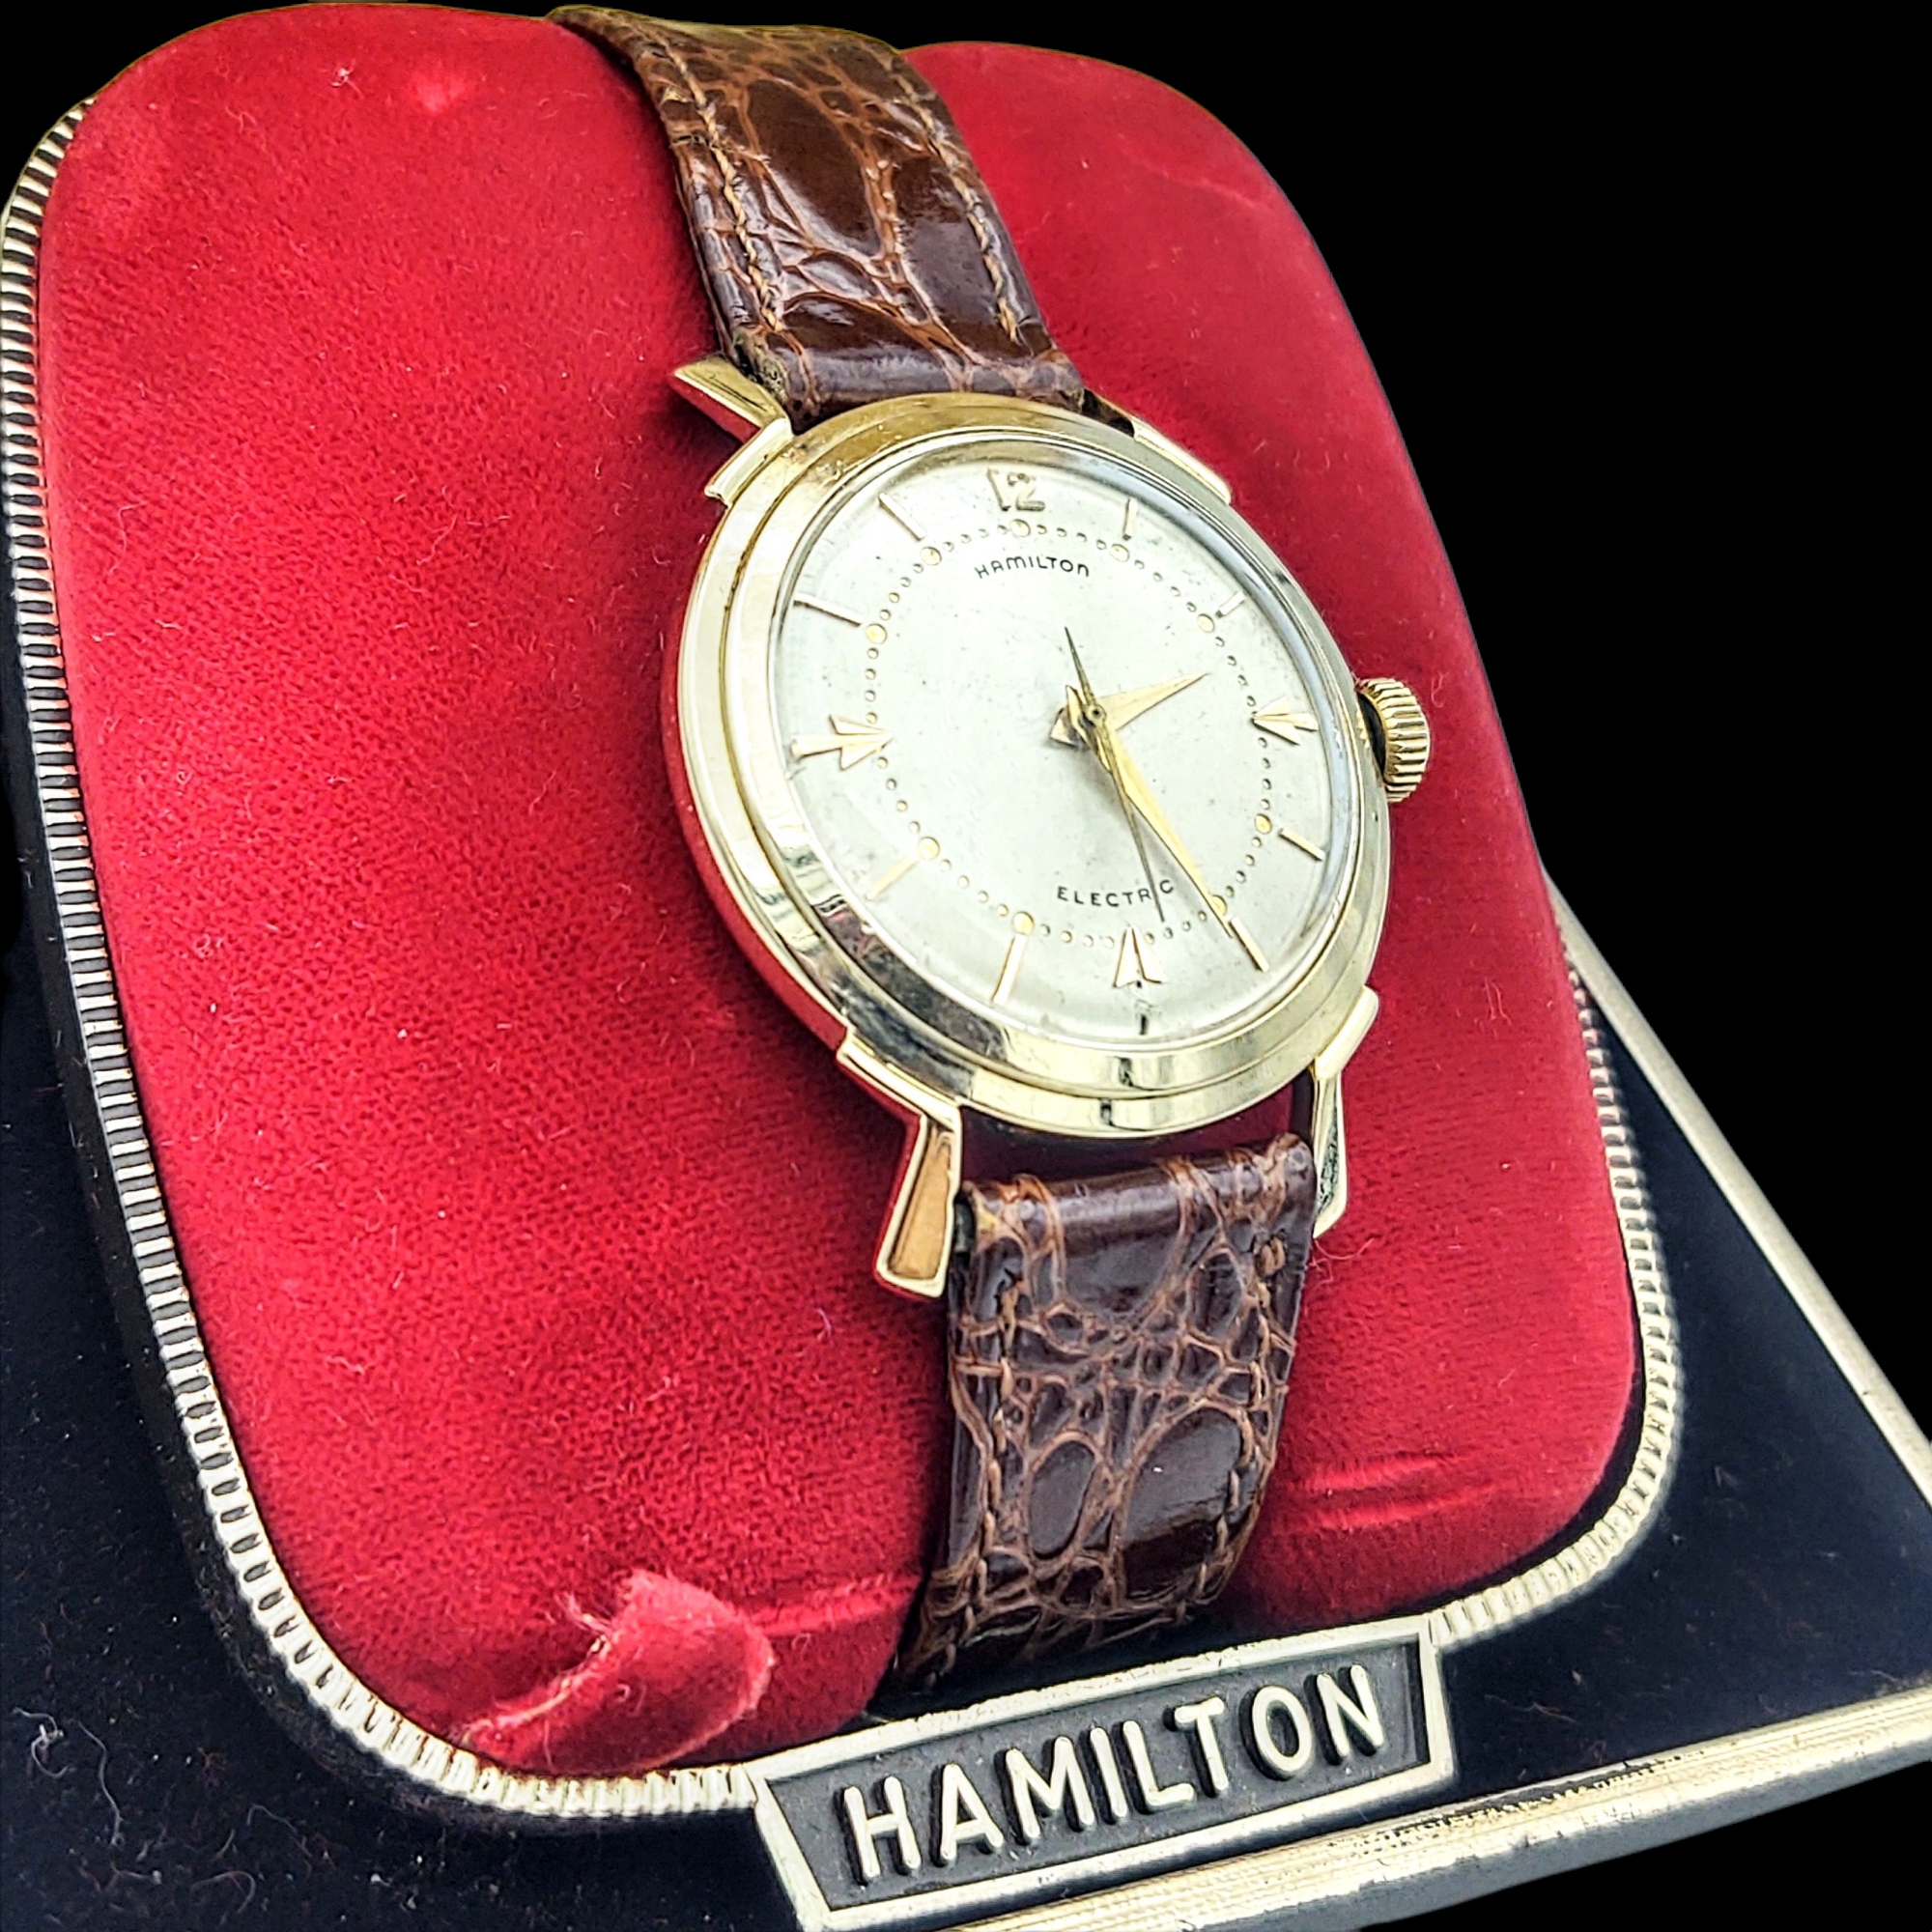 HAMILTON Electric 505 "Van Horn" Watch 14K GOLD